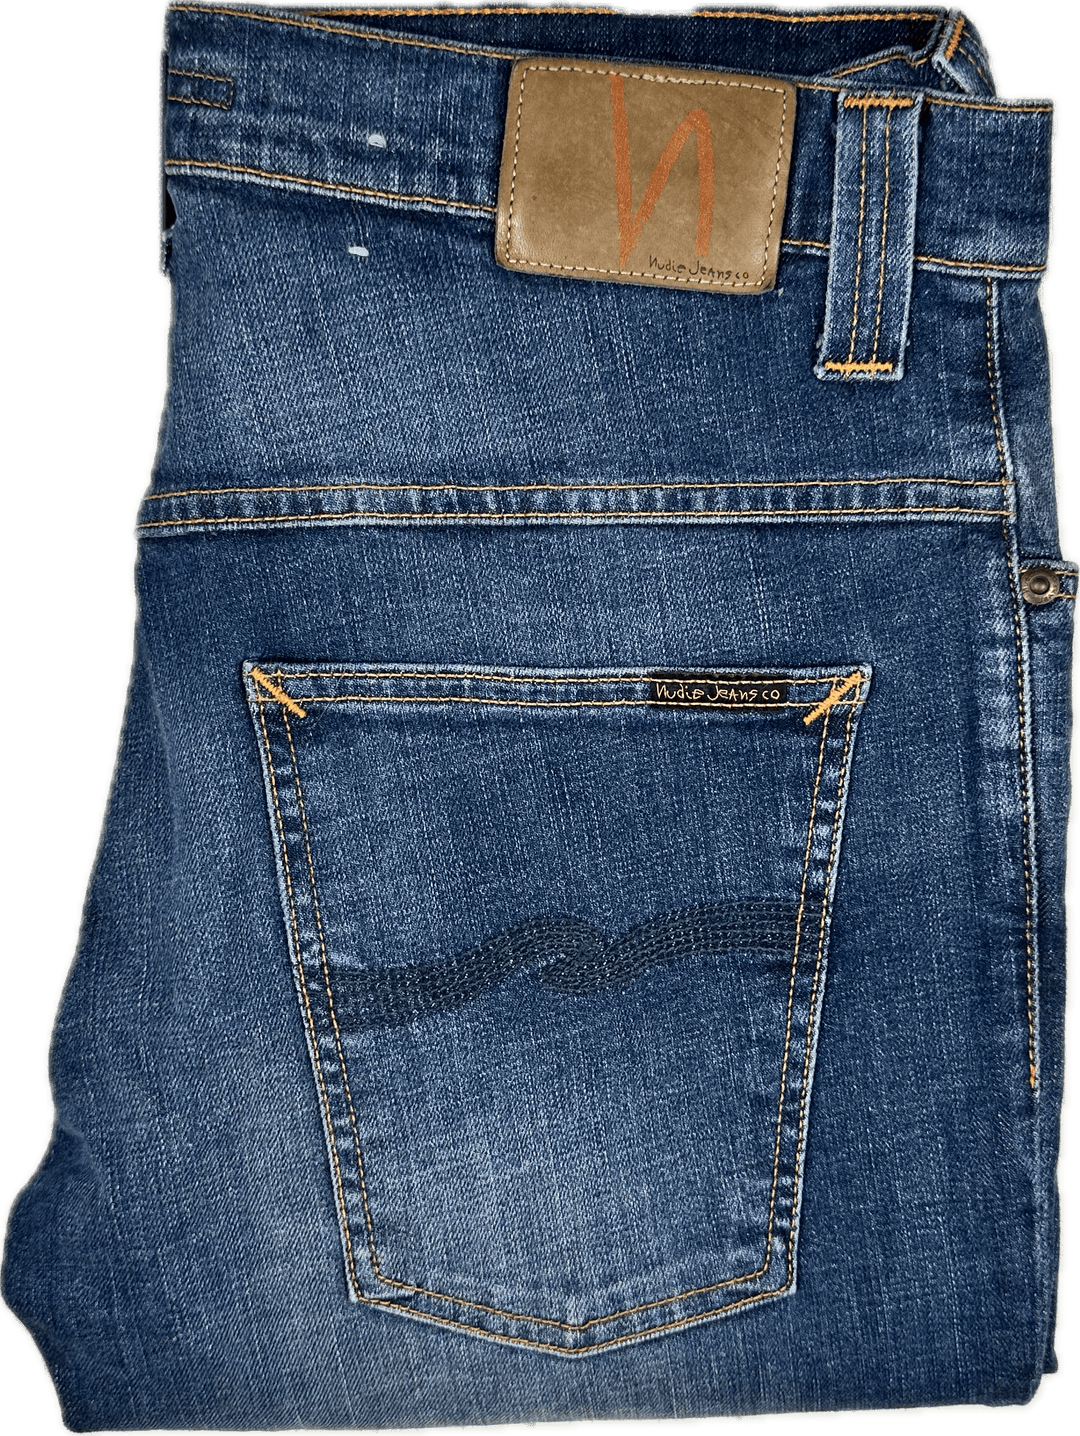 Nudie Jeans Co. 'Thin Finn' Rainy Dark Stretch Jeans - Size 34/34 - Jean Pool